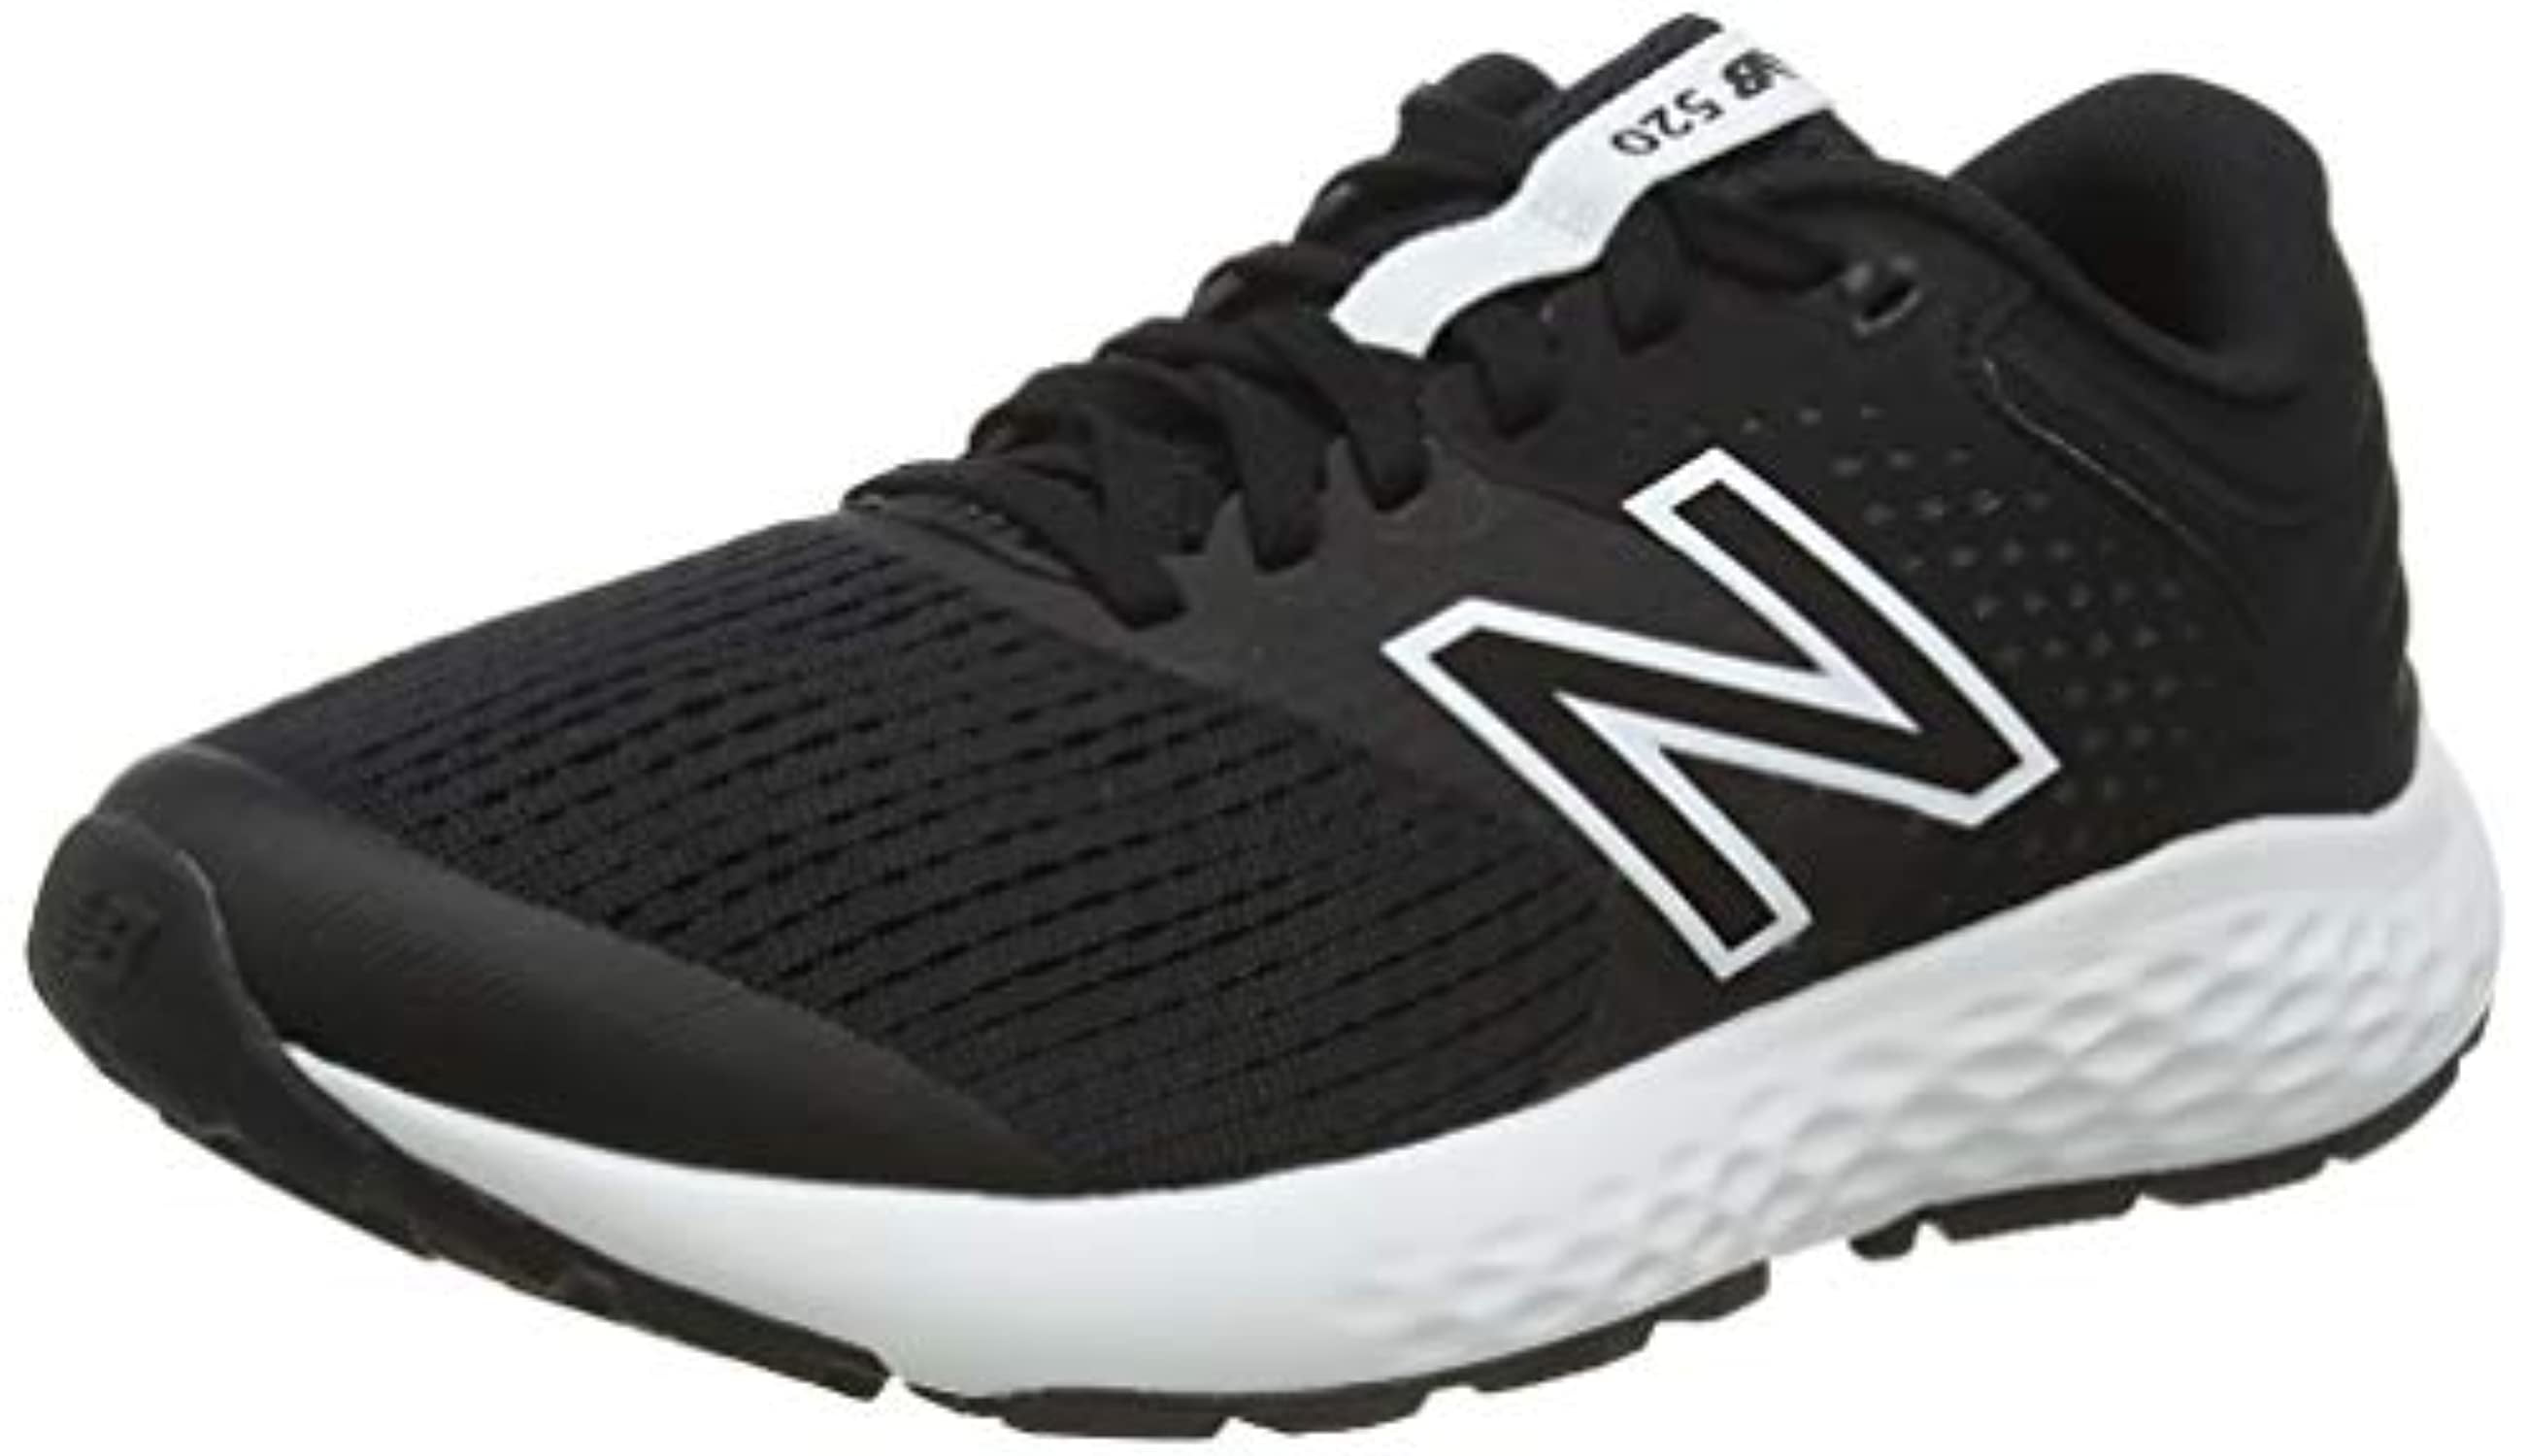 New Balance Women's 520 V7 Running Shoe